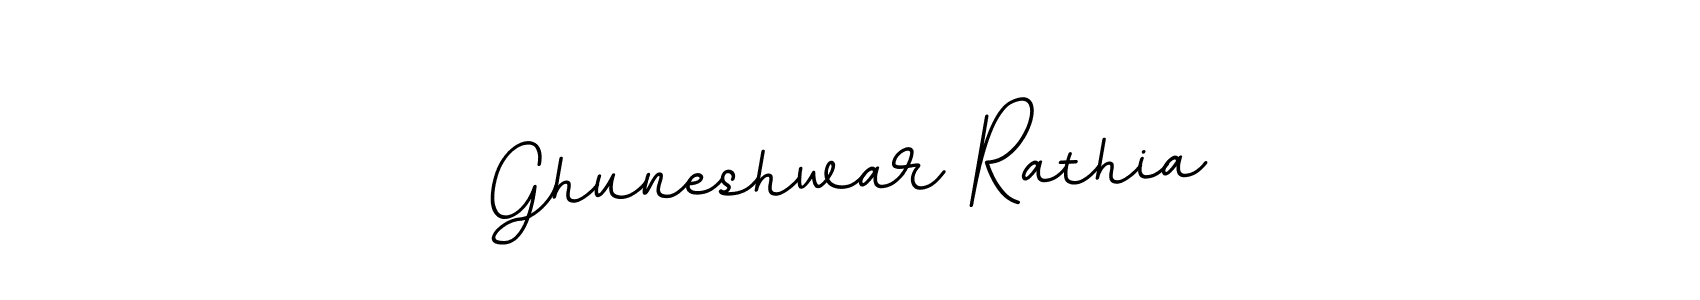 How to Draw Ghuneshwar Rathia signature style? BallpointsItalic-DORy9 is a latest design signature styles for name Ghuneshwar Rathia. Ghuneshwar Rathia signature style 11 images and pictures png